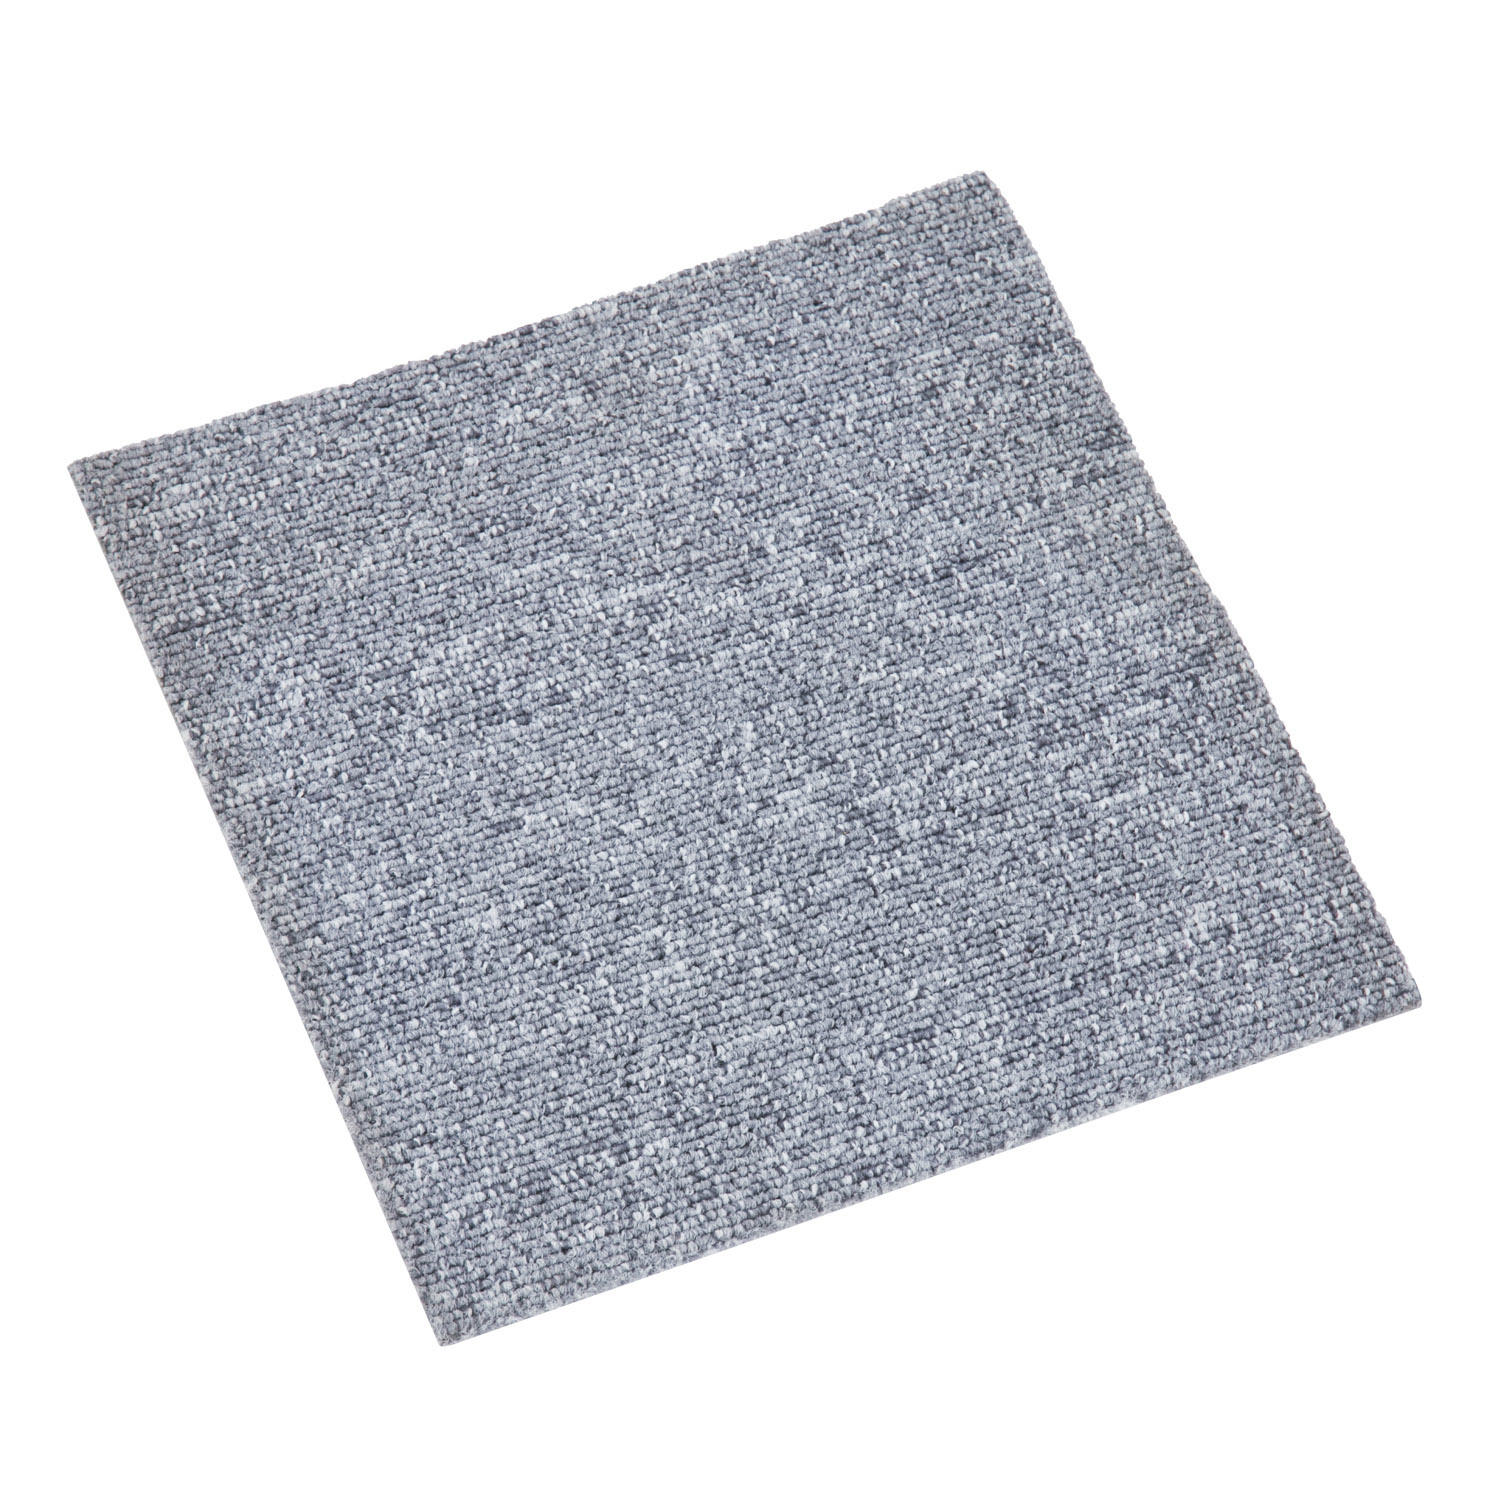 No Adhesive White Carpet Tiles For Home